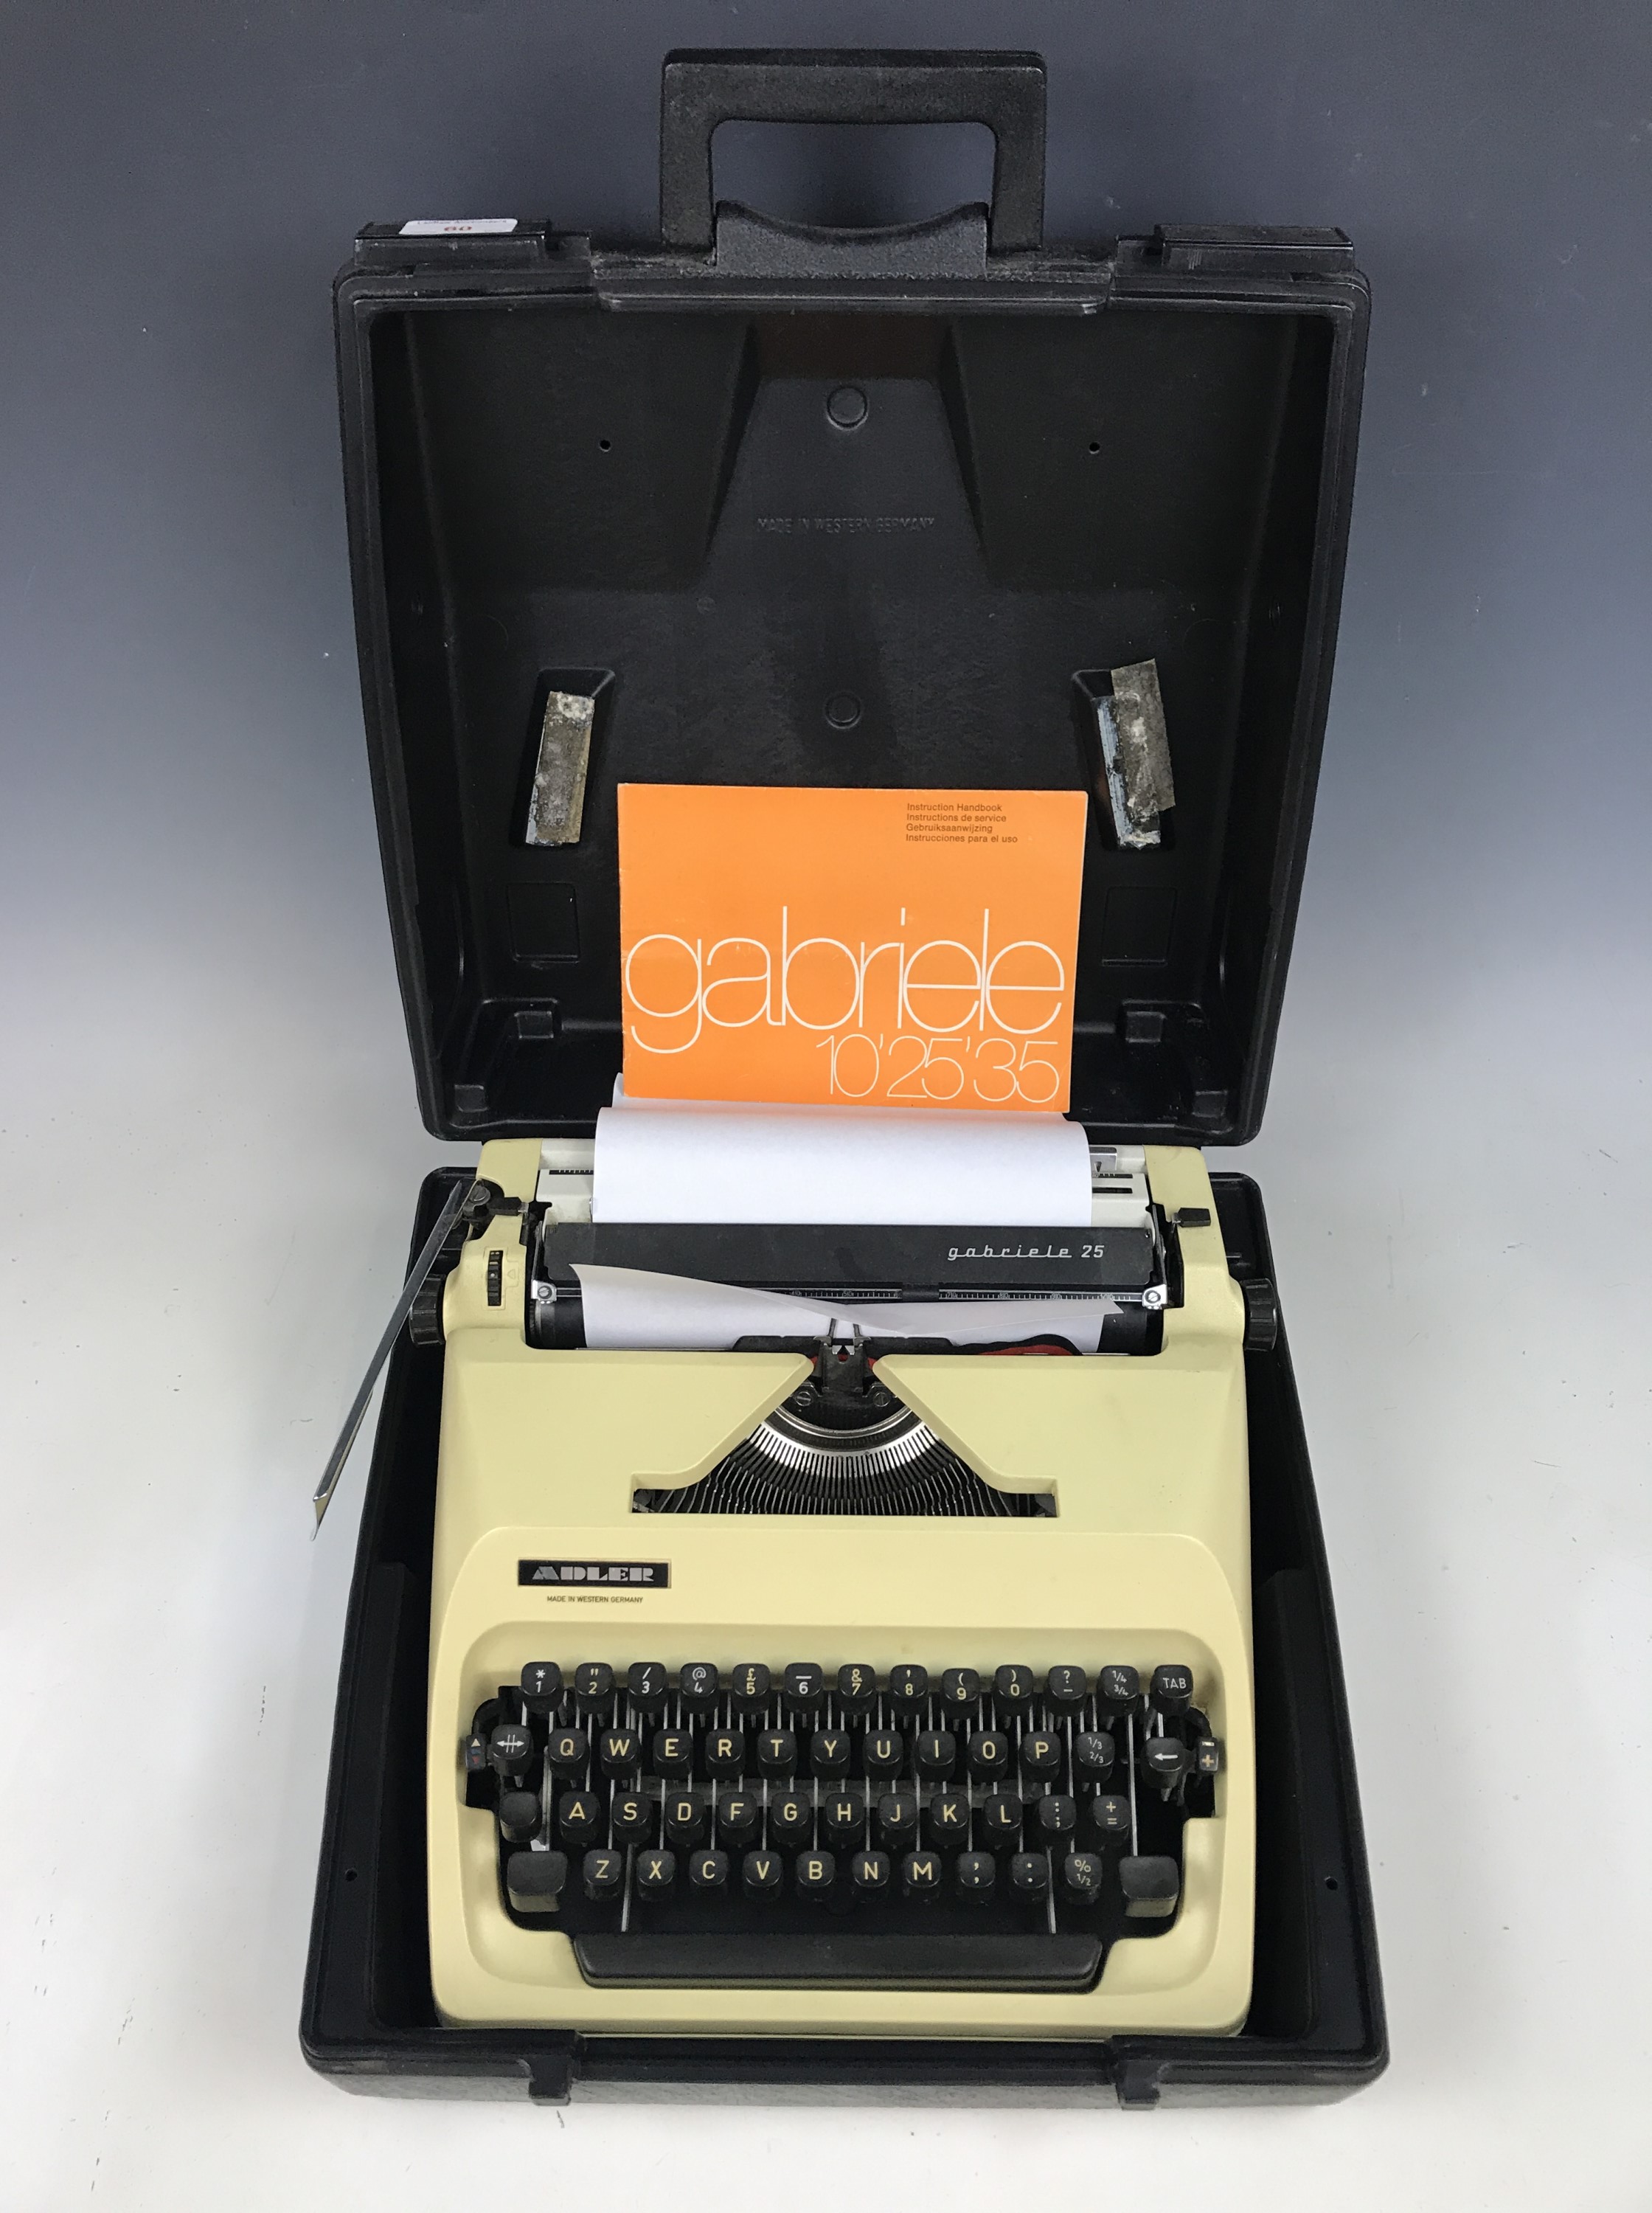 An Adler Gabrielle 25 portable typewriter